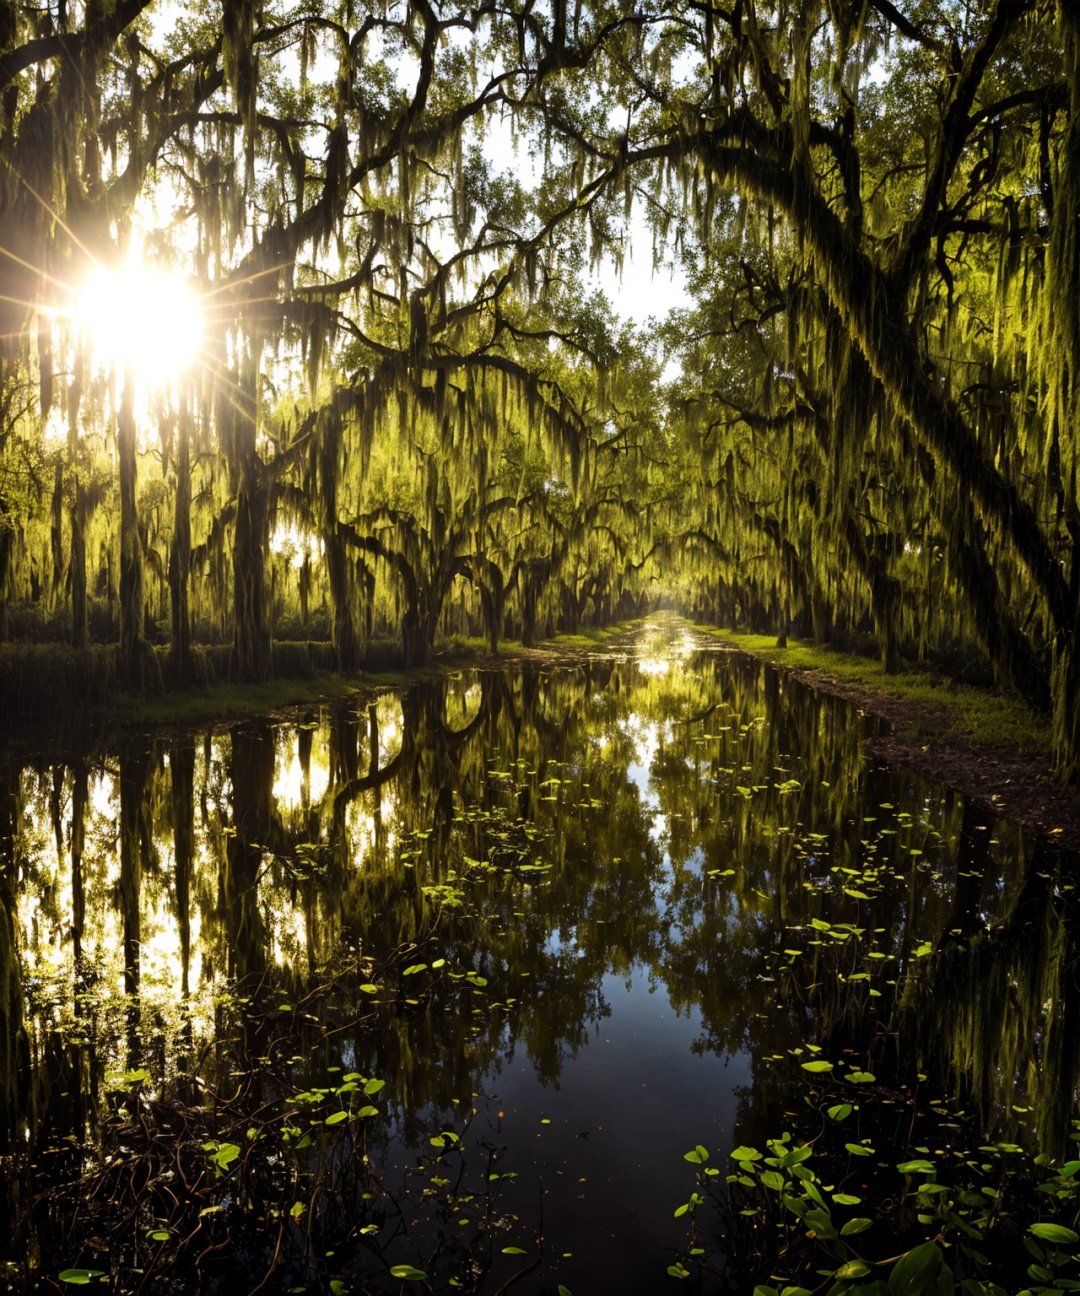 swamp, thick louisiana moss trees, willow, backlight, solarpunk, road, symmetrical